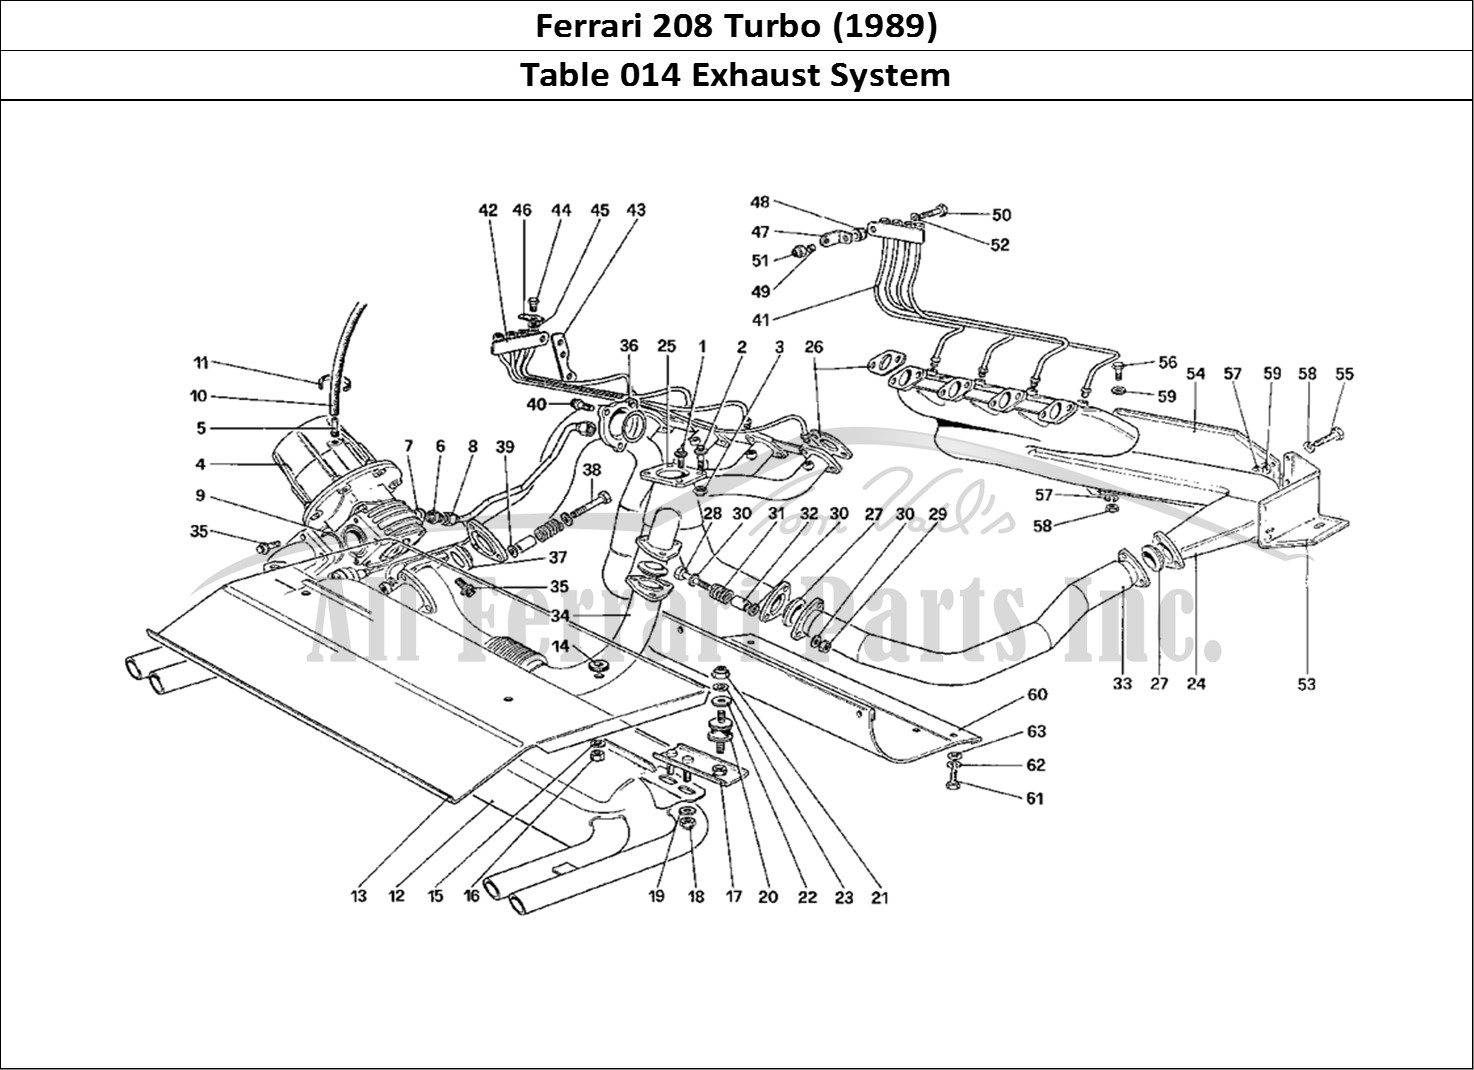 Ferrari Parts Ferrari 208 Turbo (1989) Page 014 Exhaust System